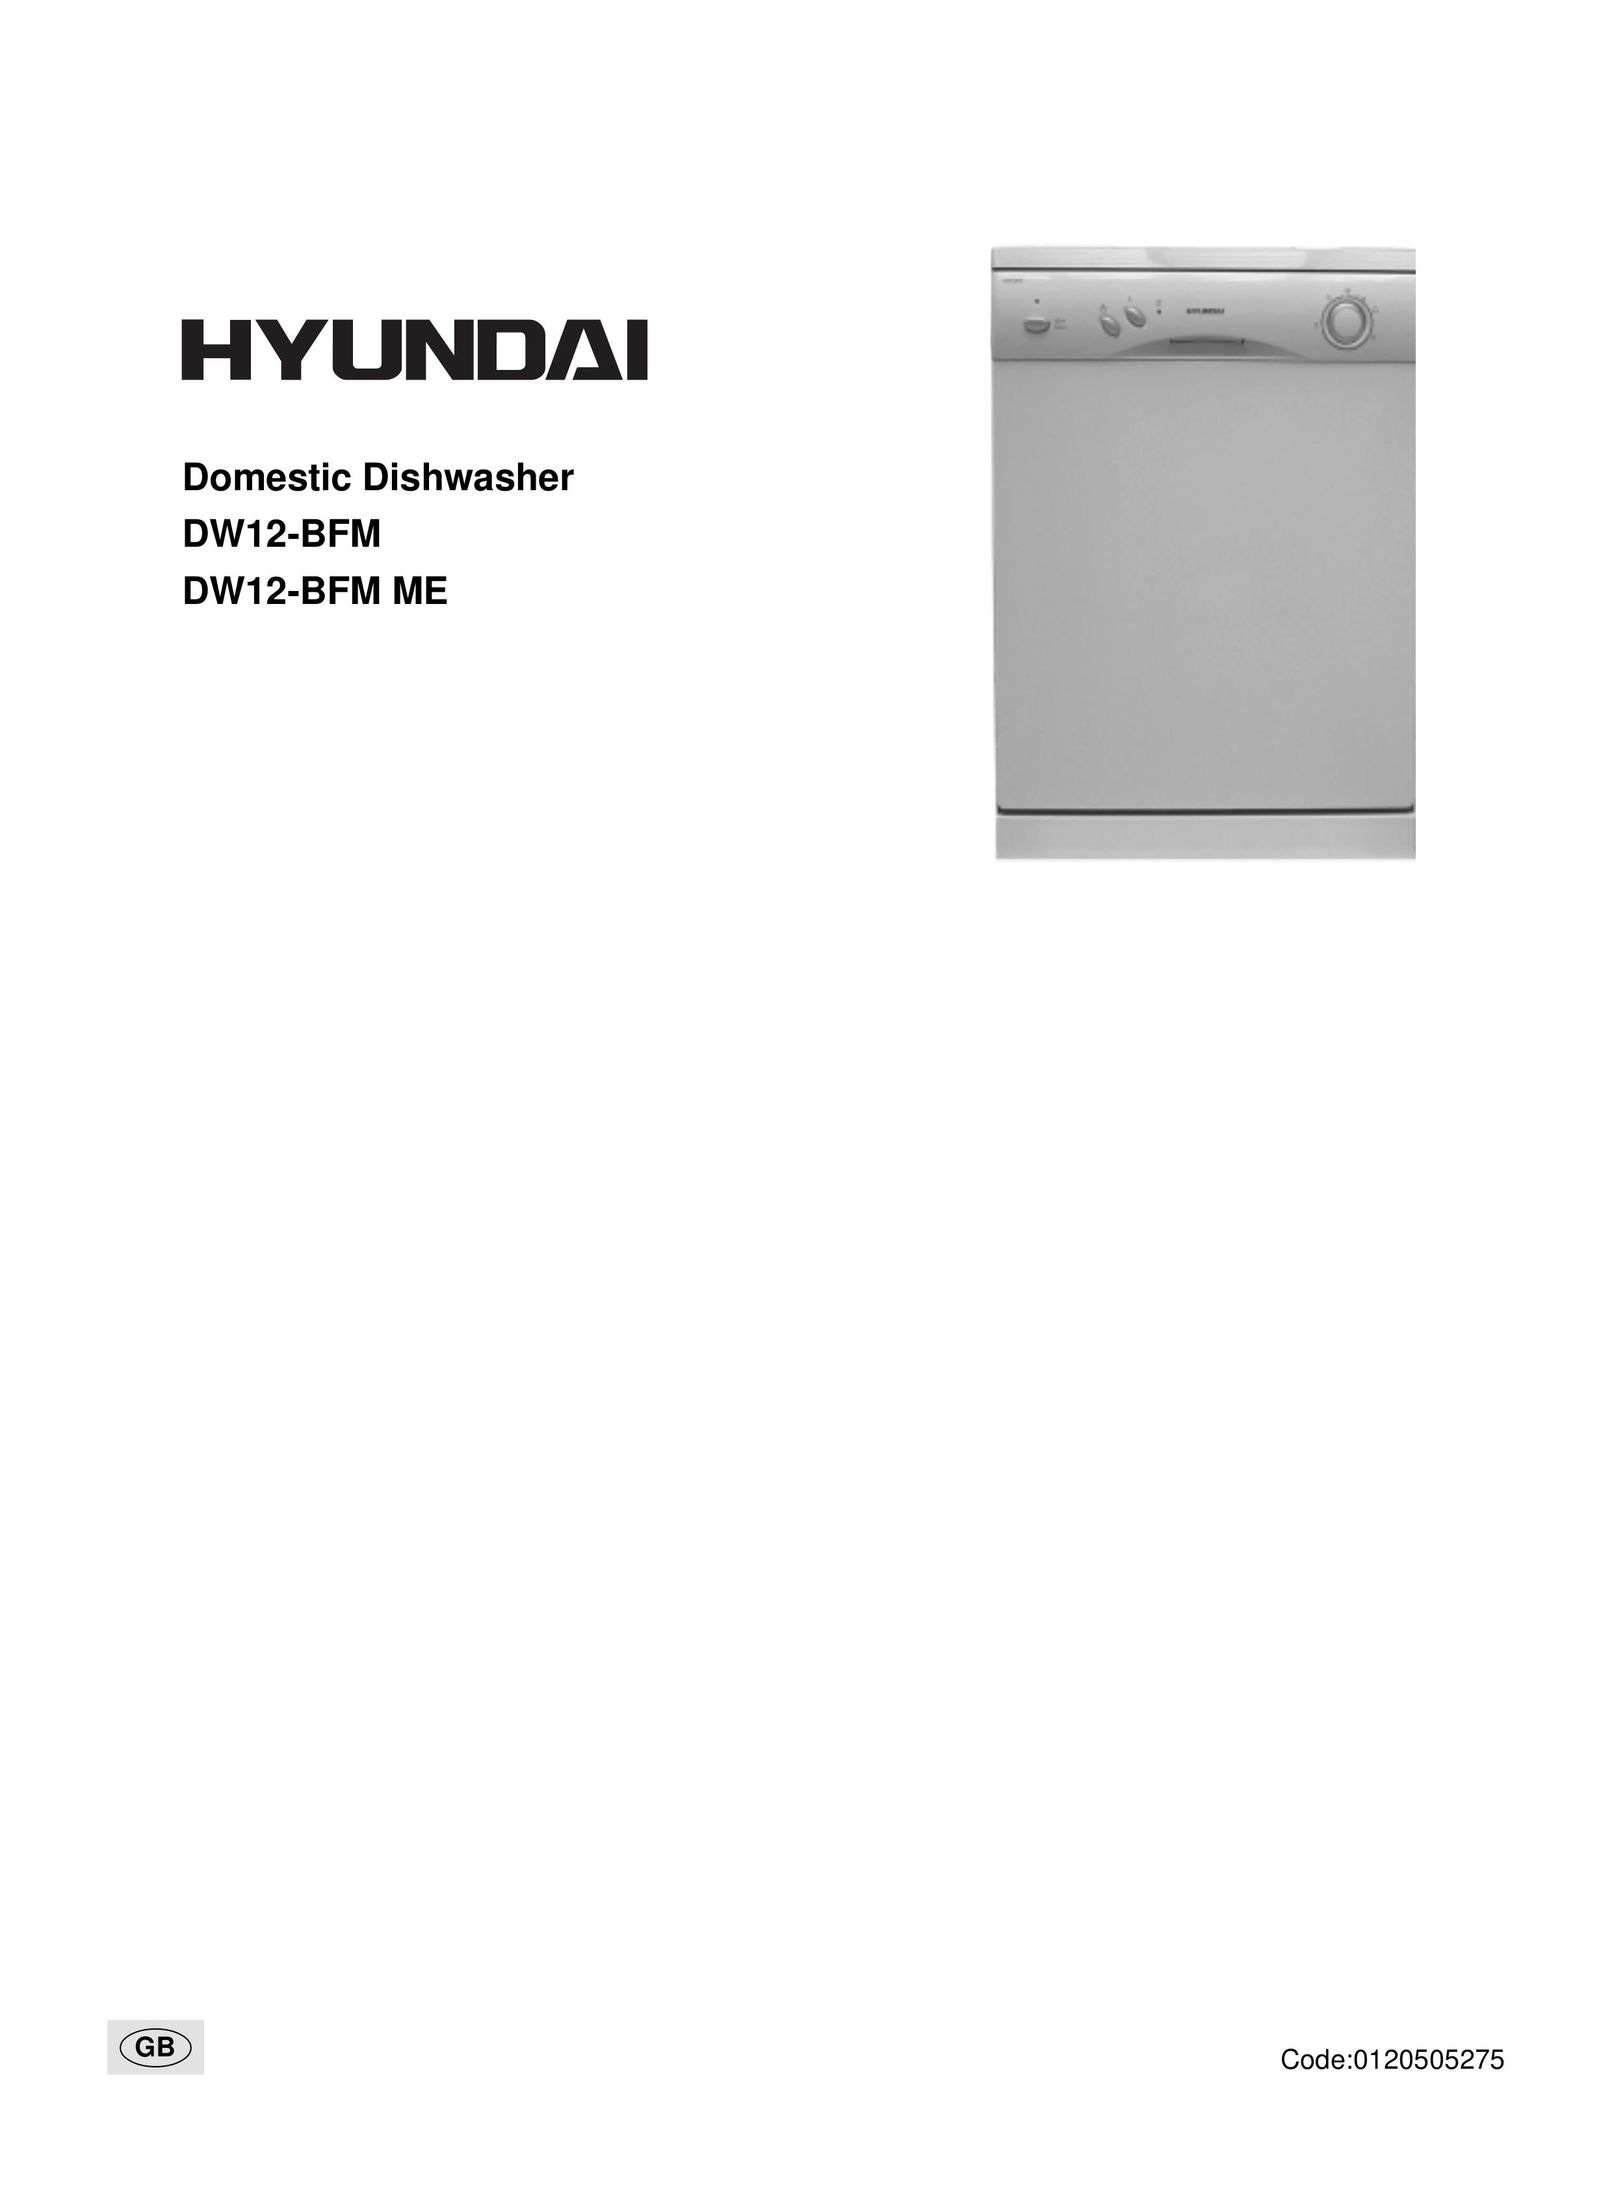 Hyundai IT DW12-BFM Dishwasher User Manual